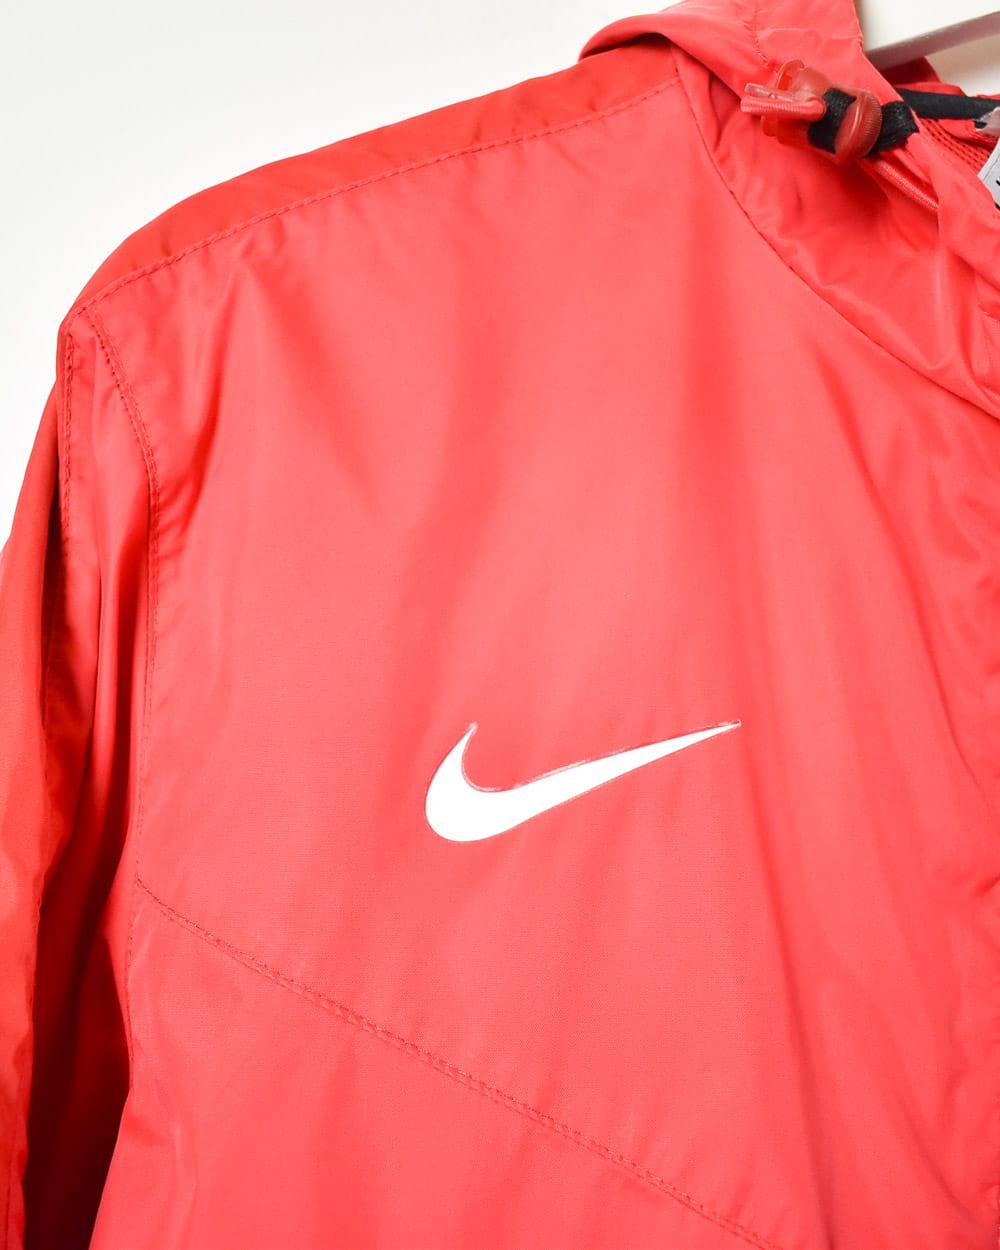 Red Nike Hooded Windbreaker Jacket - Small